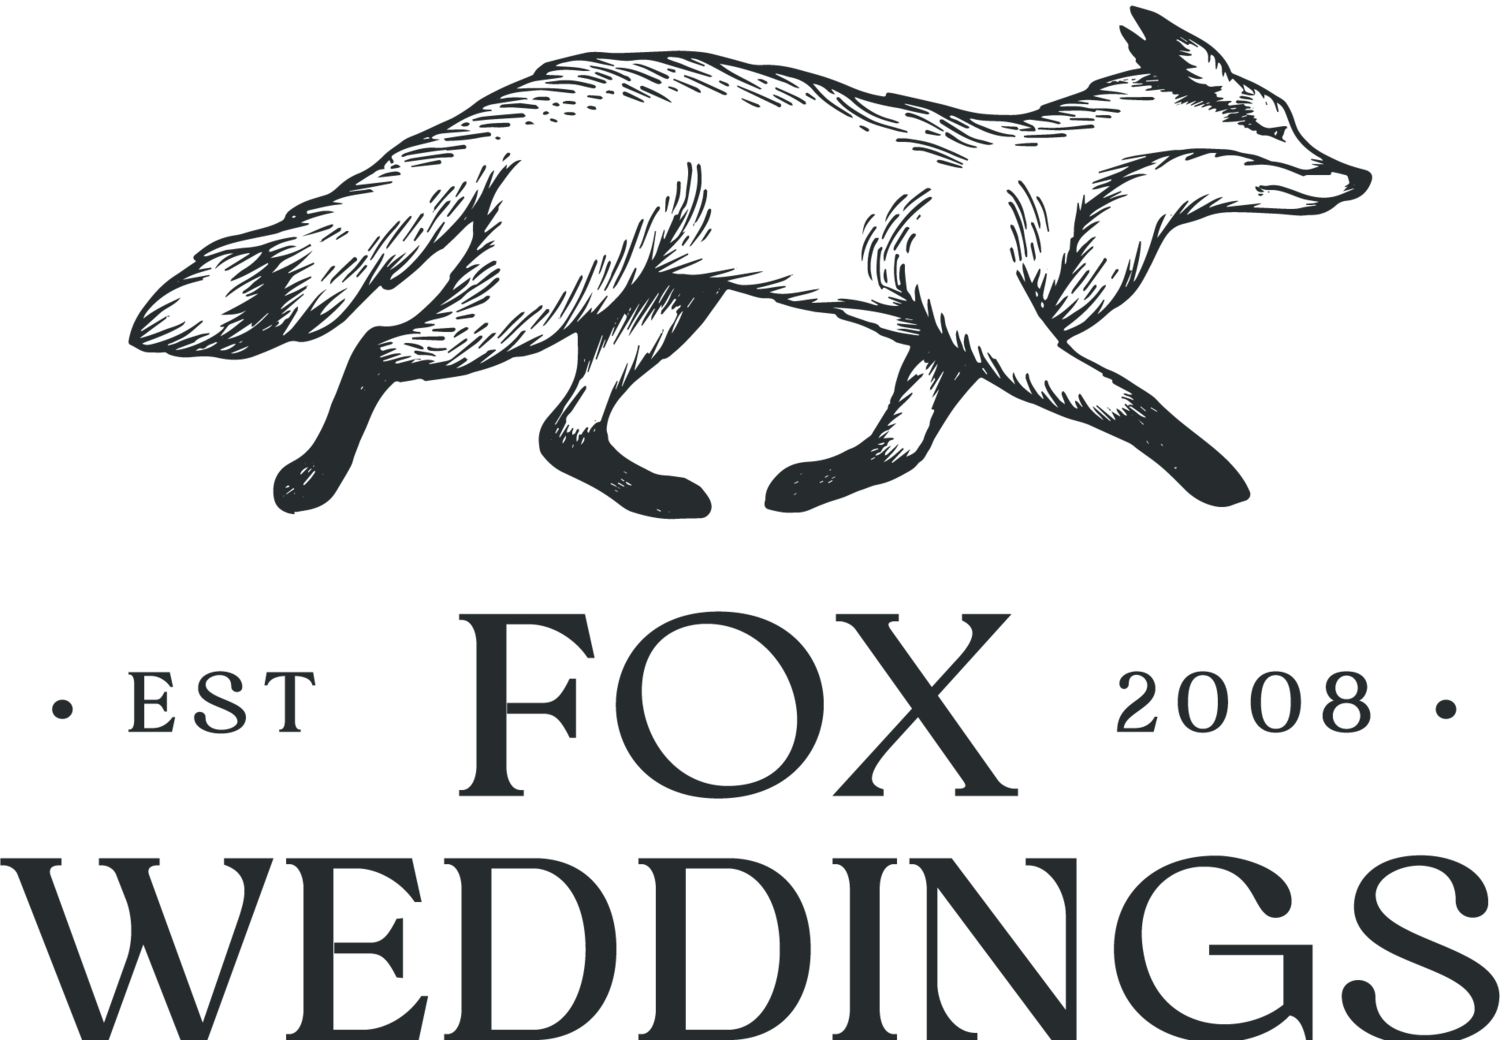 Fox Weddings